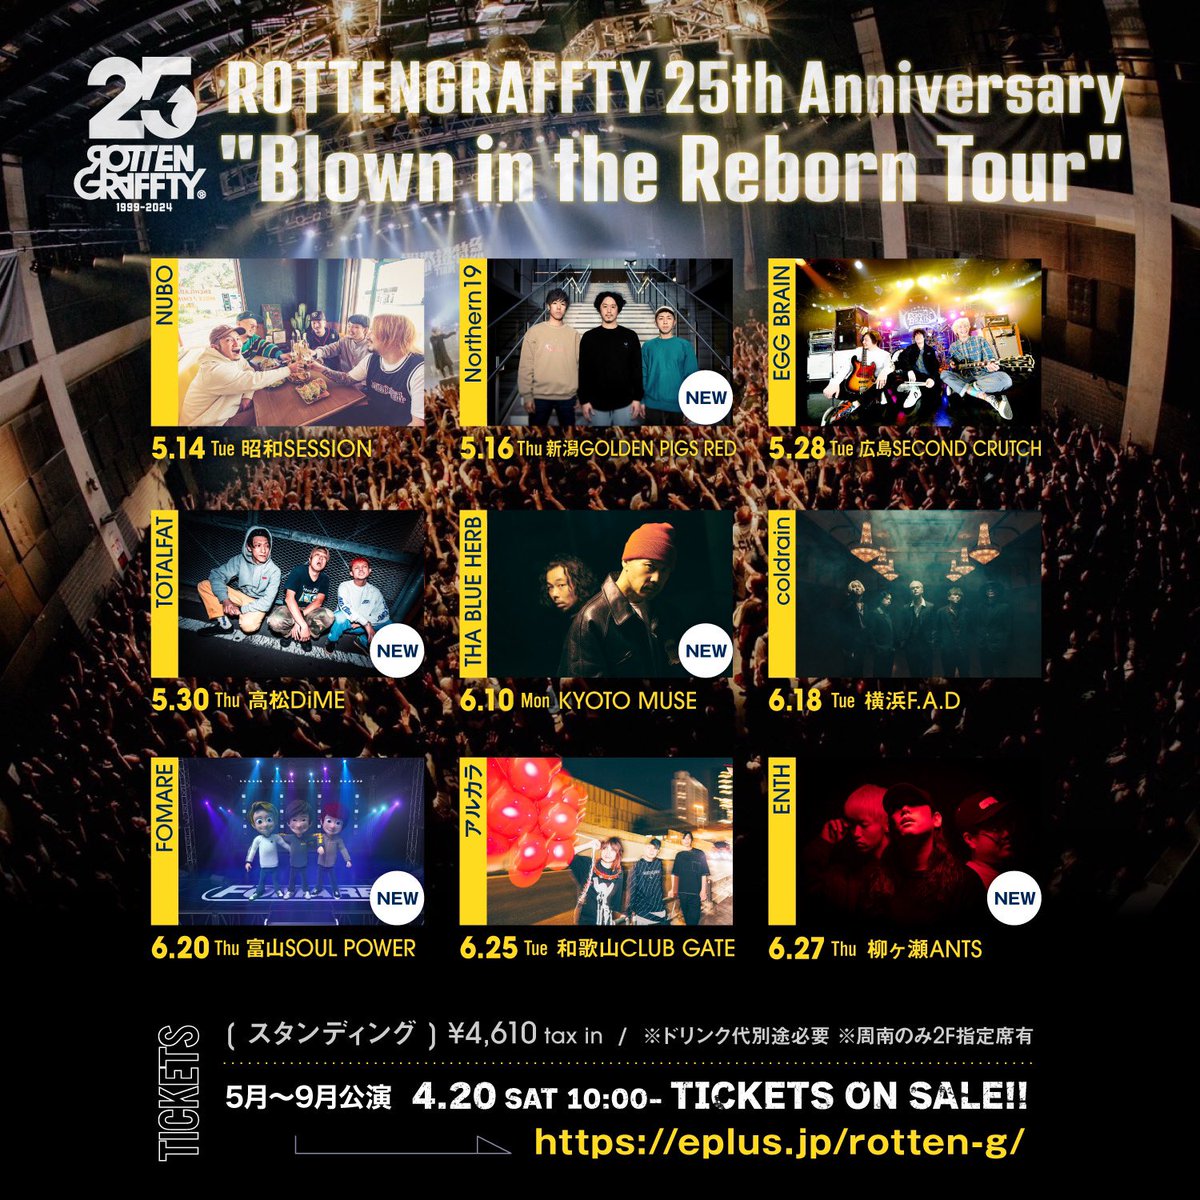 【Live Info】 @ROTTEN_KYOTO presents. ROTTENGRAFFTY 25th Anniversary 'Blown in the Reborn Tour' 8/6(火)@.甲府KAZOO HALL 8/8(木)@.福井CHOP The BONEZが ゲストとして参戦決定！🔥 🎫チケットは'明日'から！✅↓ 4/20(土)10:00〜 eplus.jp/rotten-g/ #thebonez #ROTTEN25th